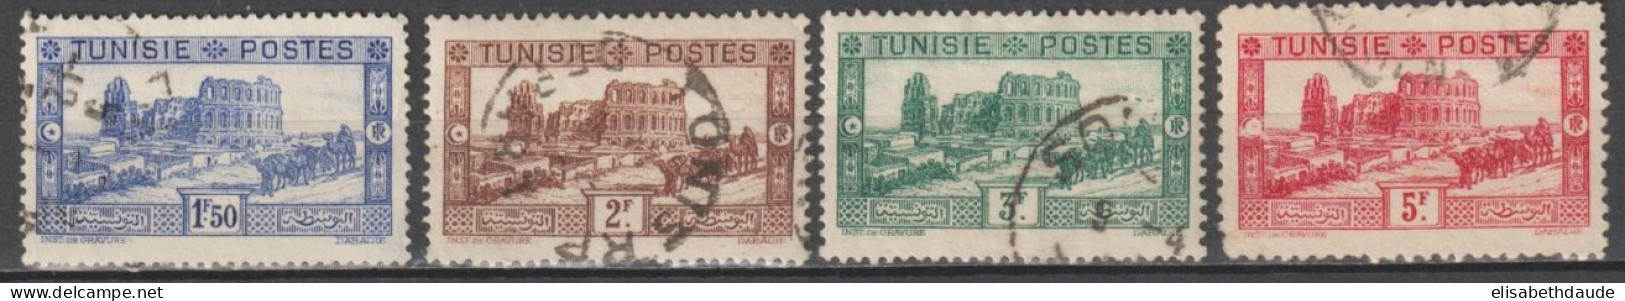 TUNISIE - 1931 - YVERT N°175/178 OBLITERES - COTE = 43.75 EUR. - Gebraucht